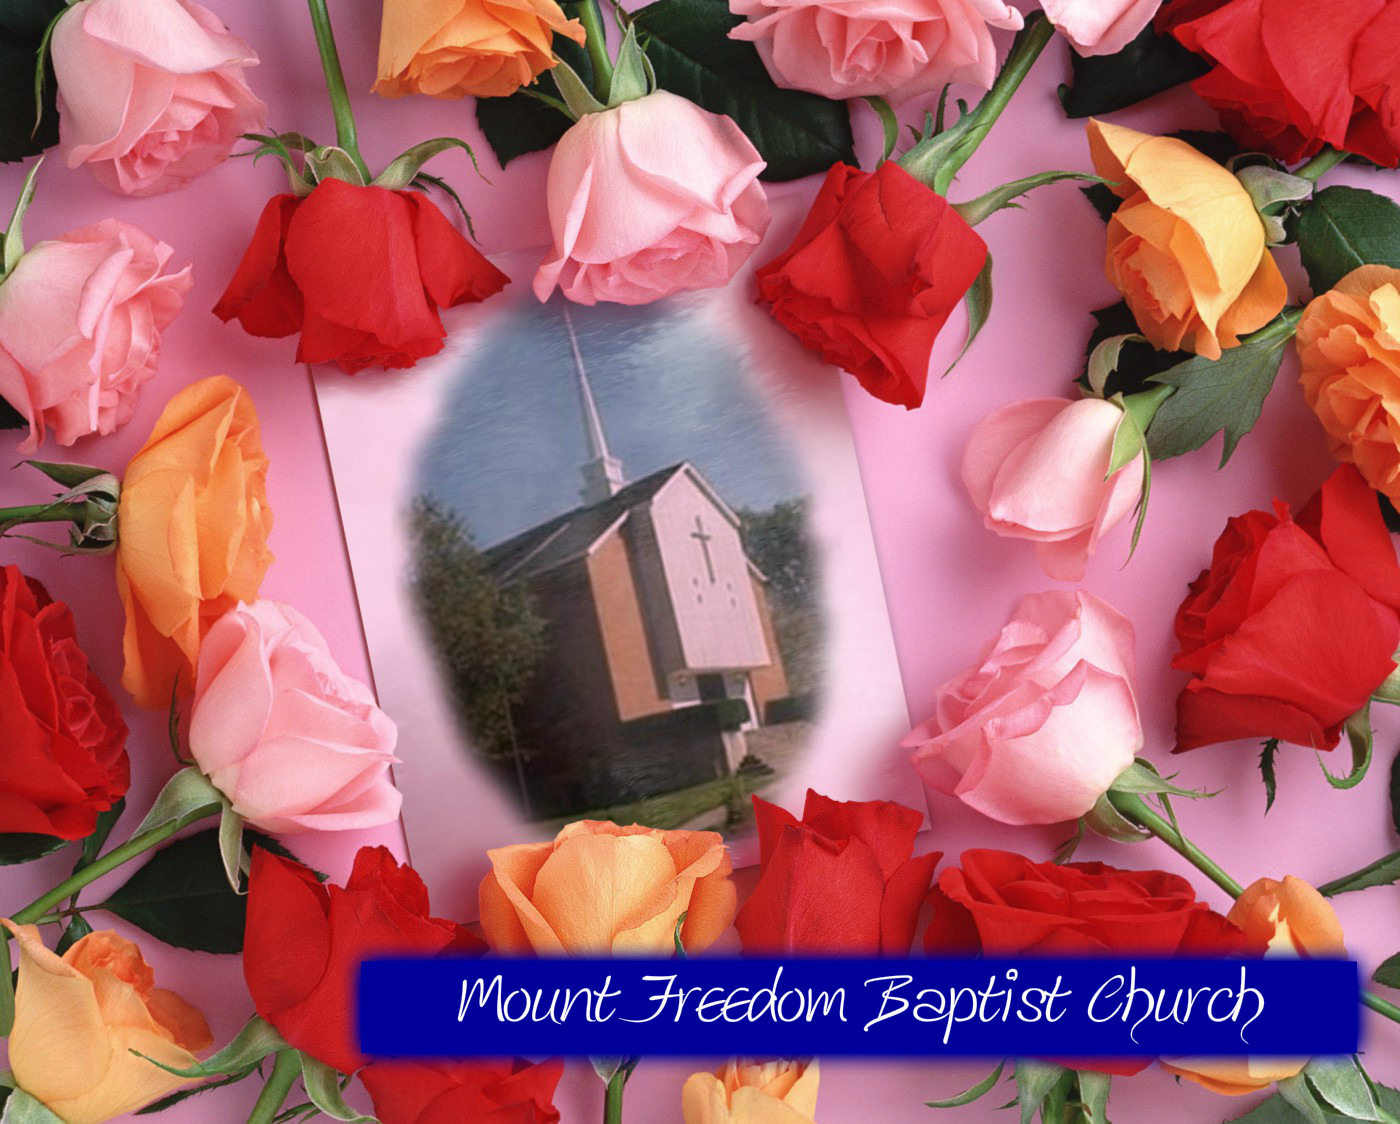 Mount Freedom Baptist Church (with Nathan Elliott, Pastor) - 10/15/16 - # 96